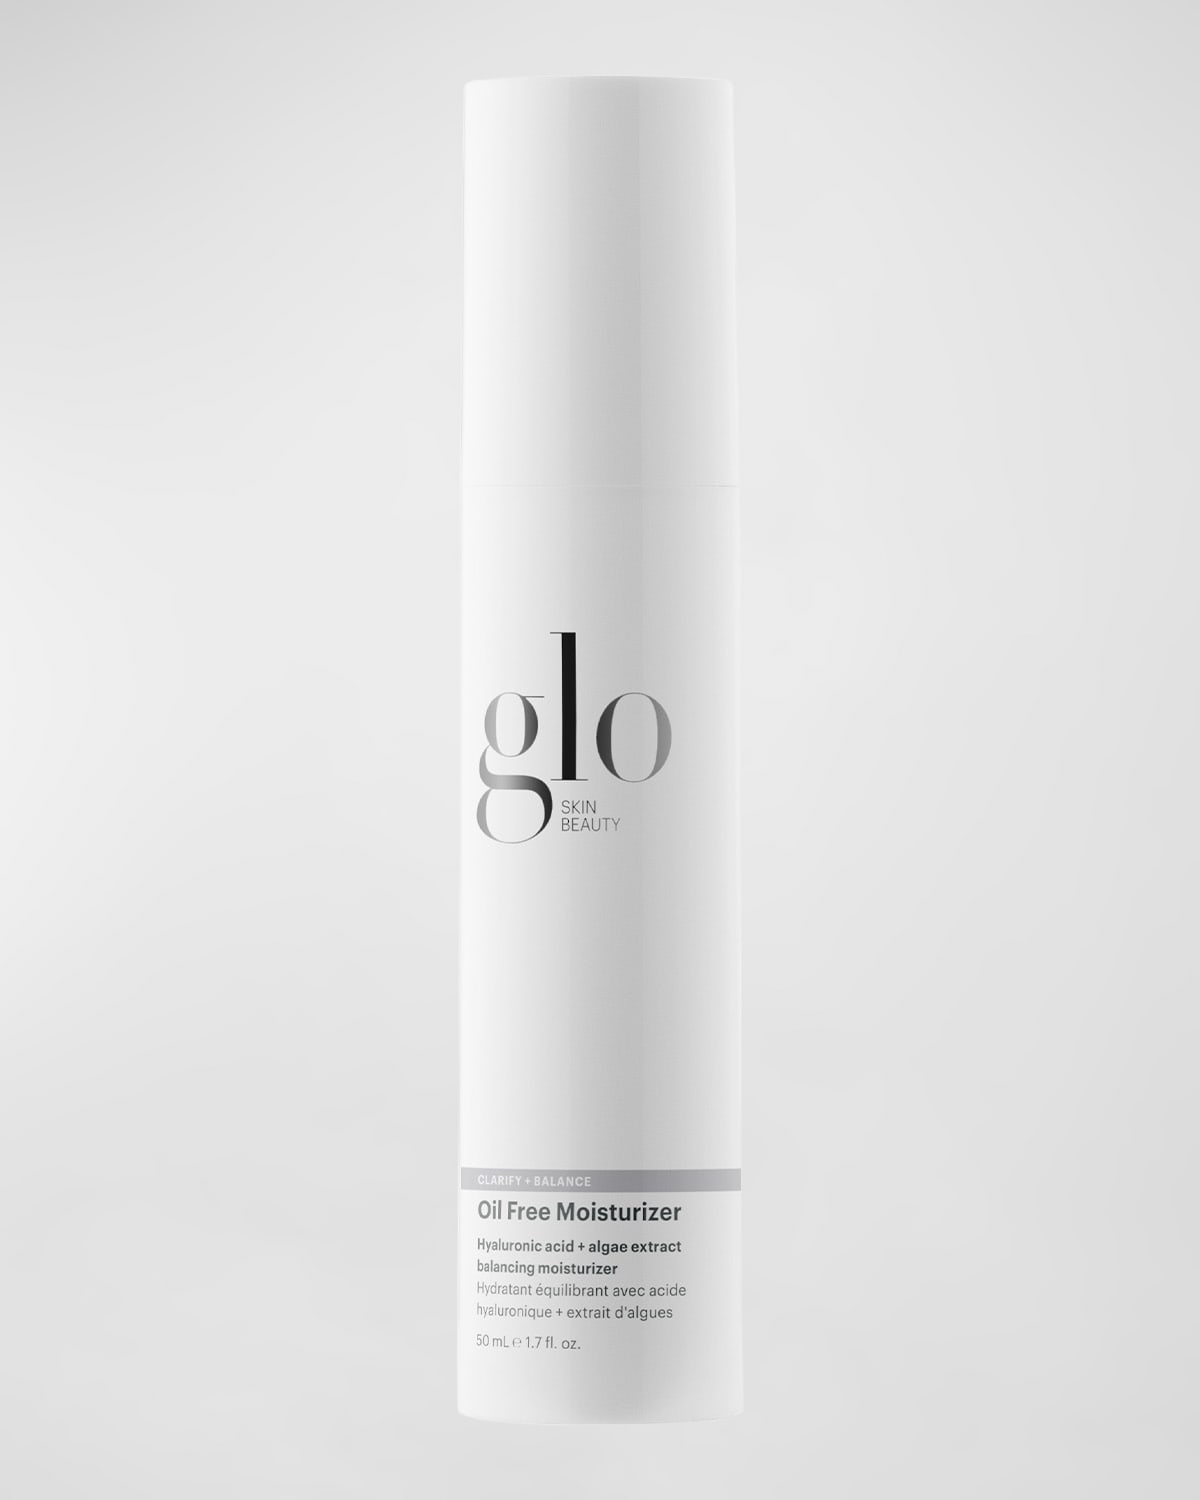 Glo Skin Beauty Oil Free Moisturizer, 1.7 oz.